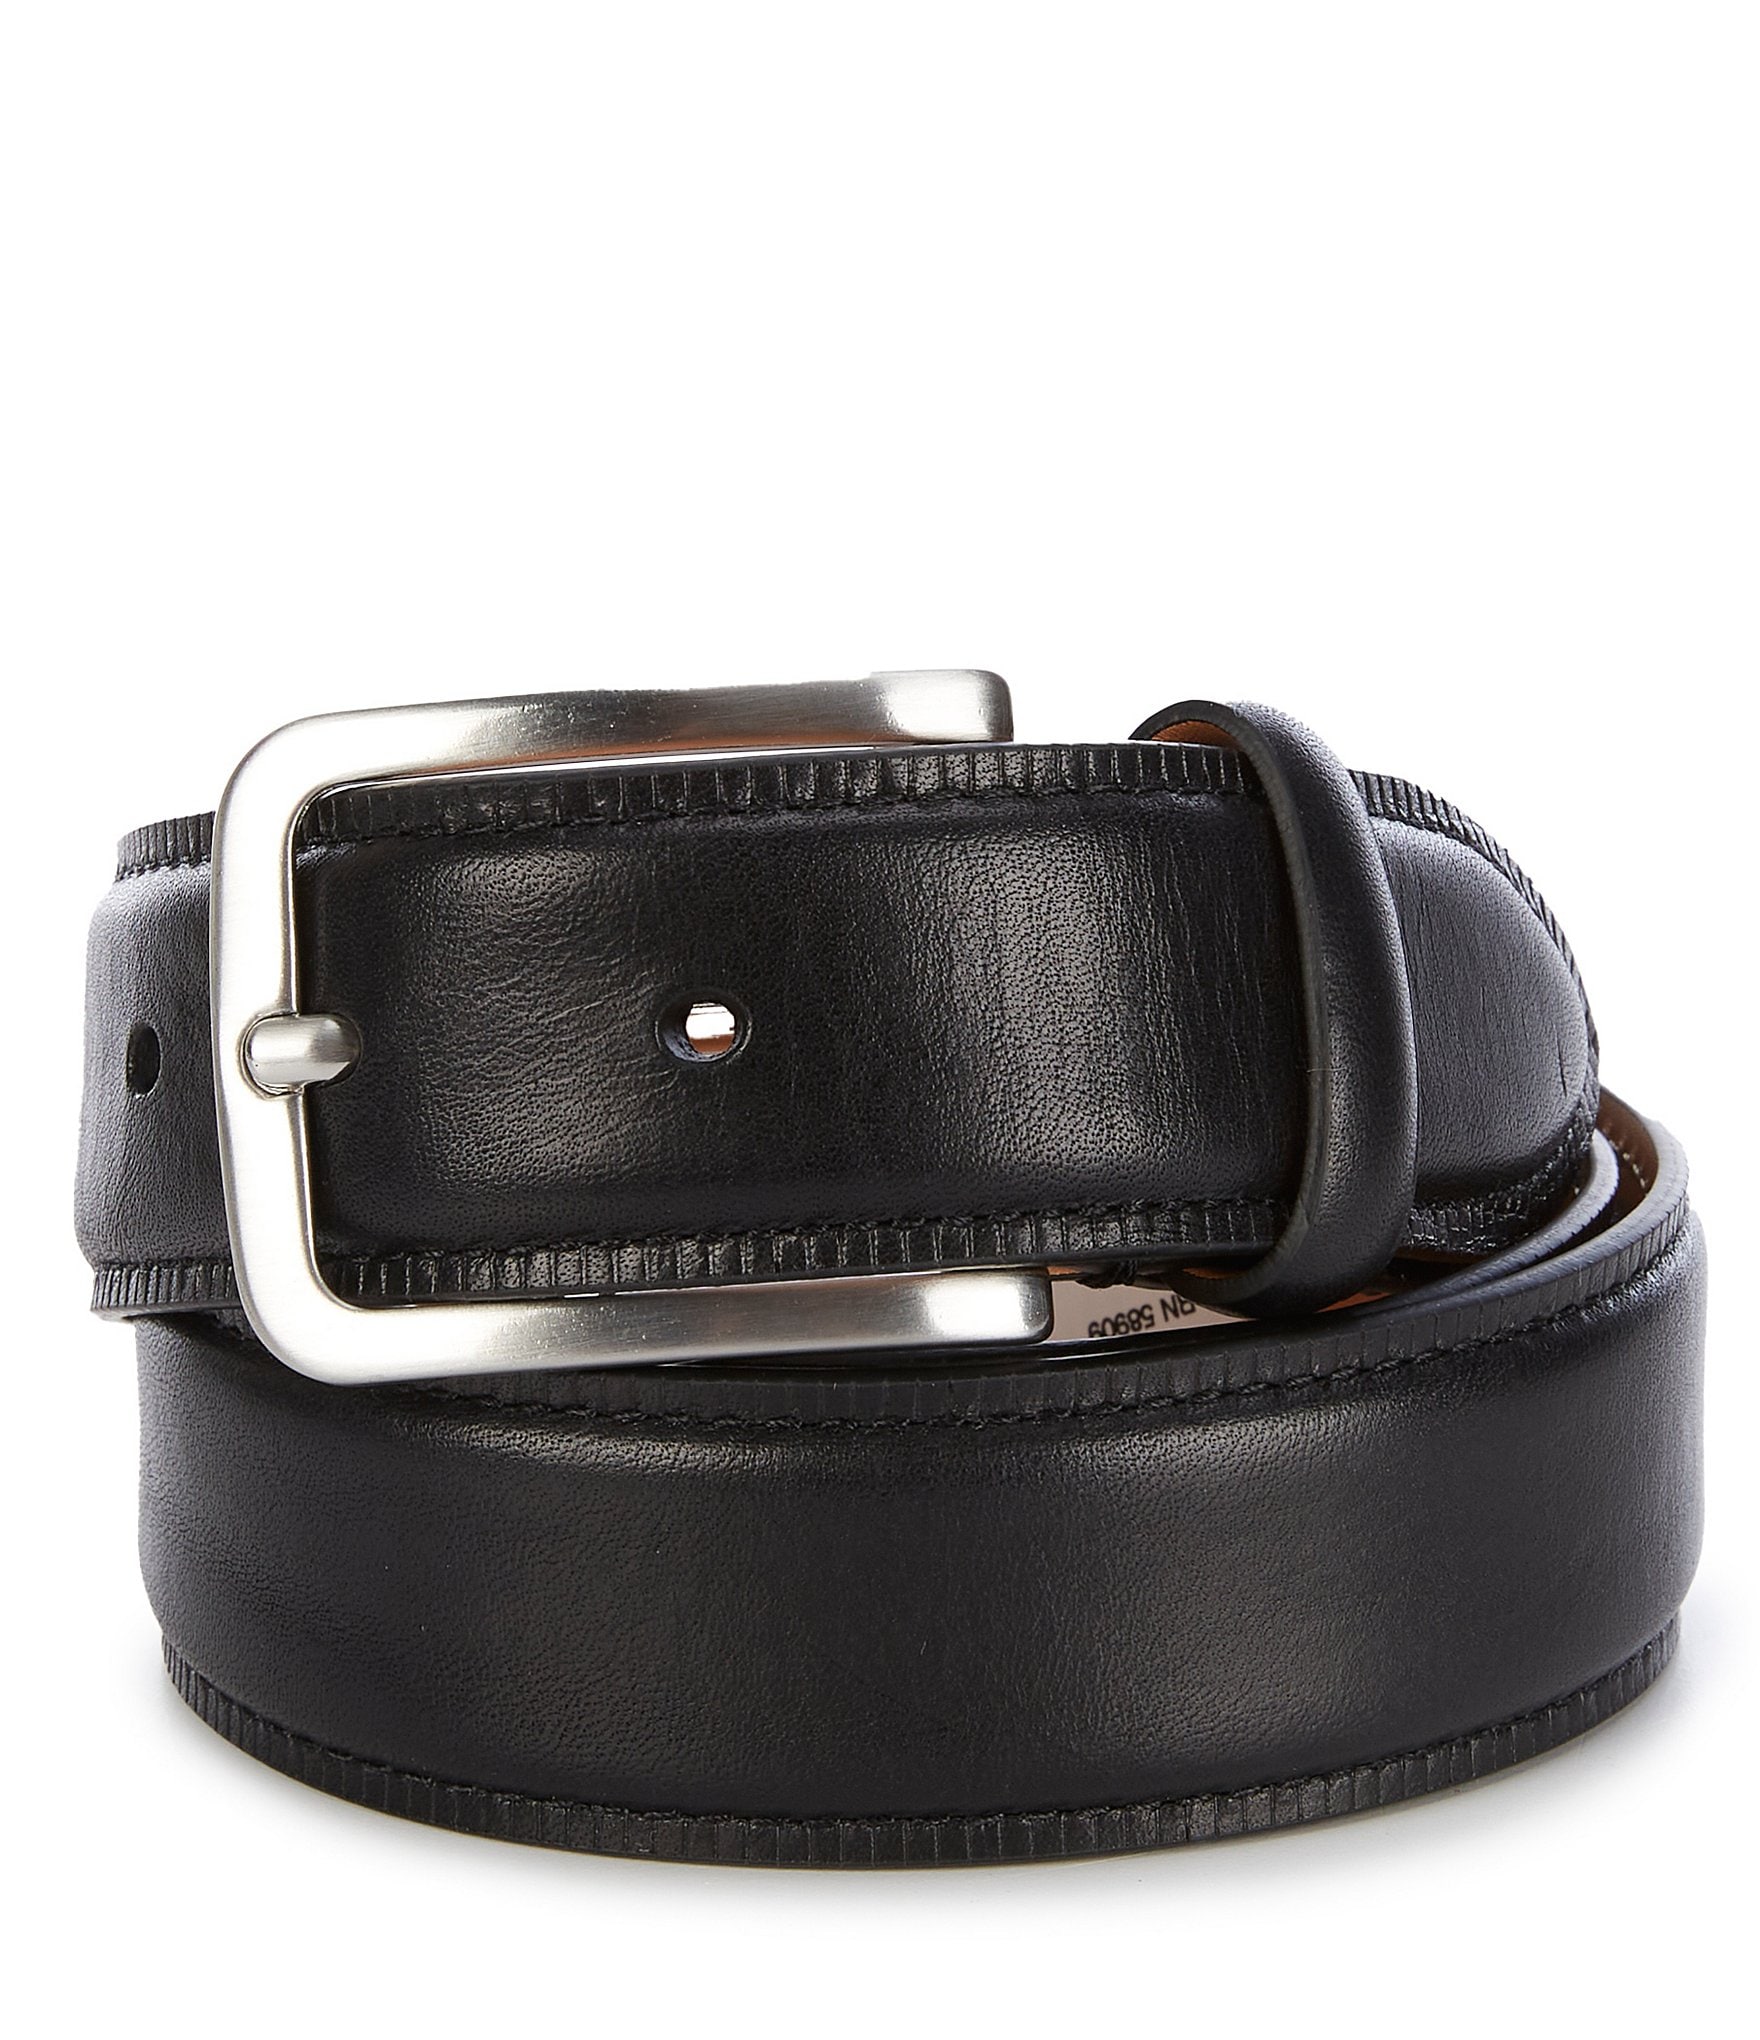 Antigua Leather Dress Belt in Black